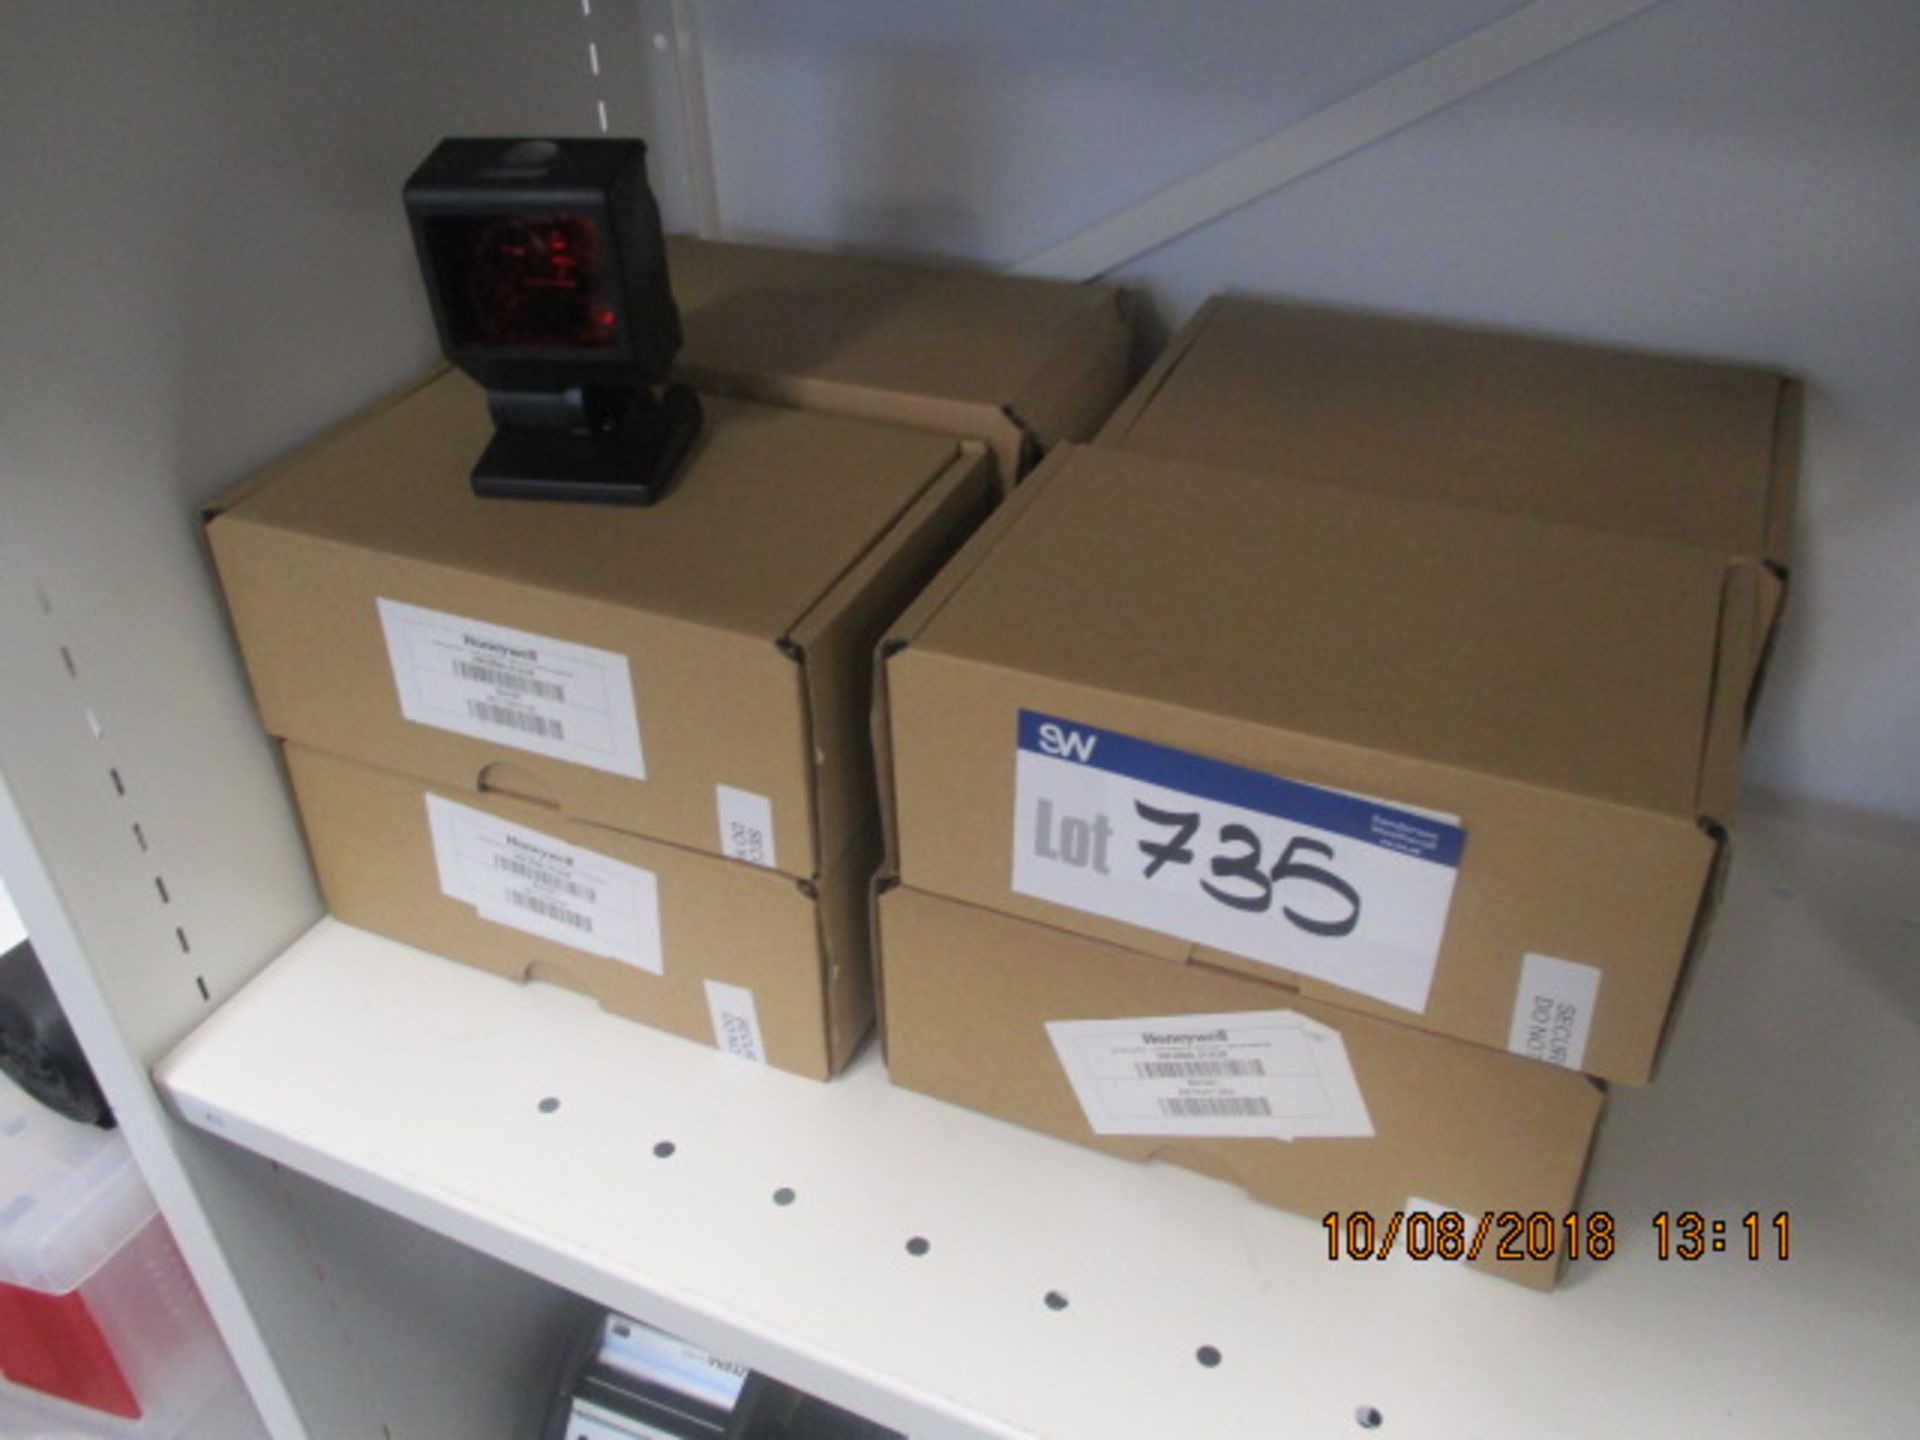 5 x Honeywell MK3580-31A38 Barcode Scanners